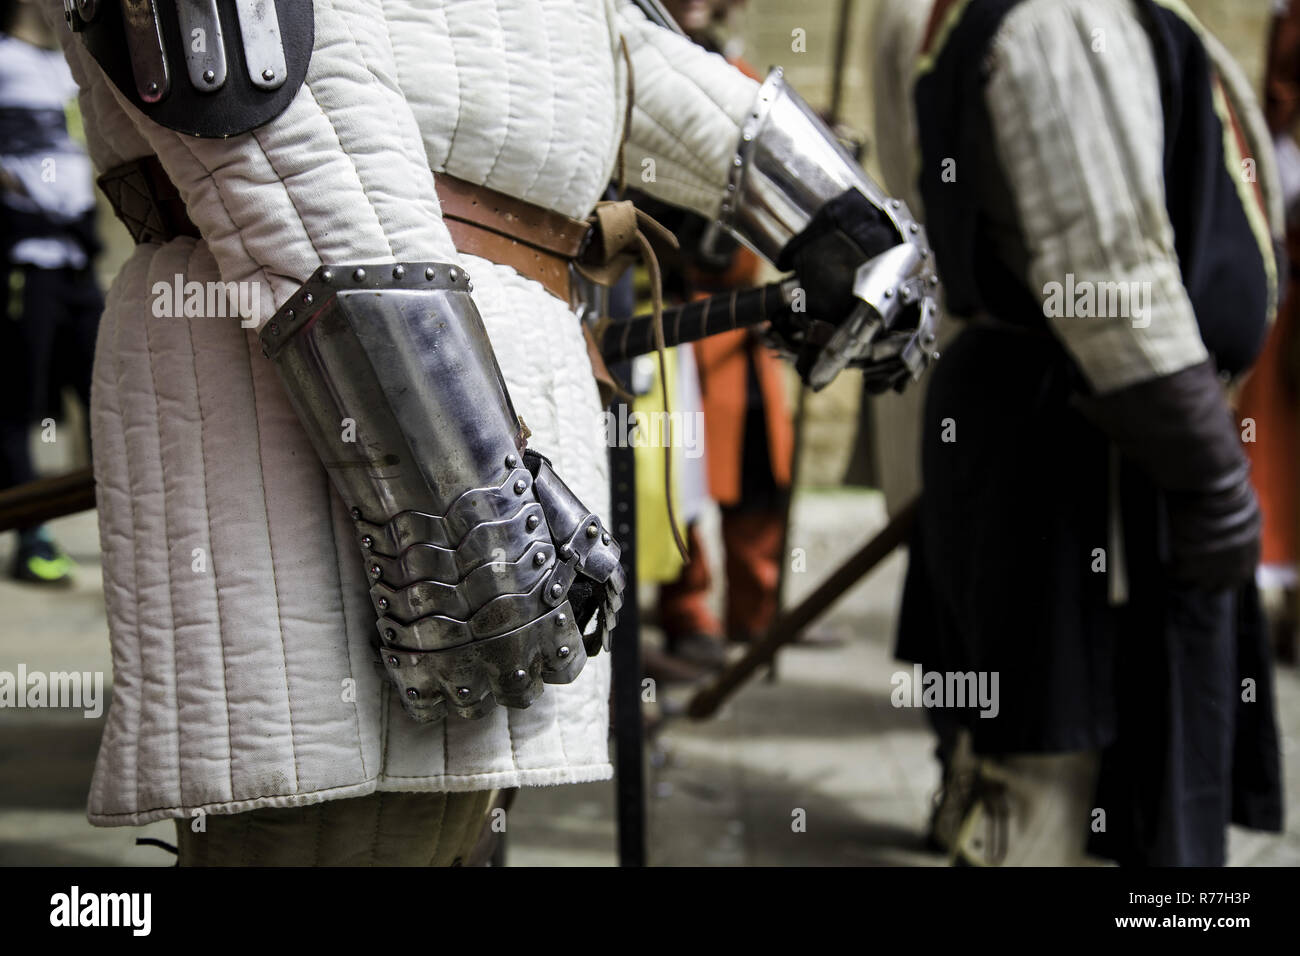 Medieval armor glove Stock Photo